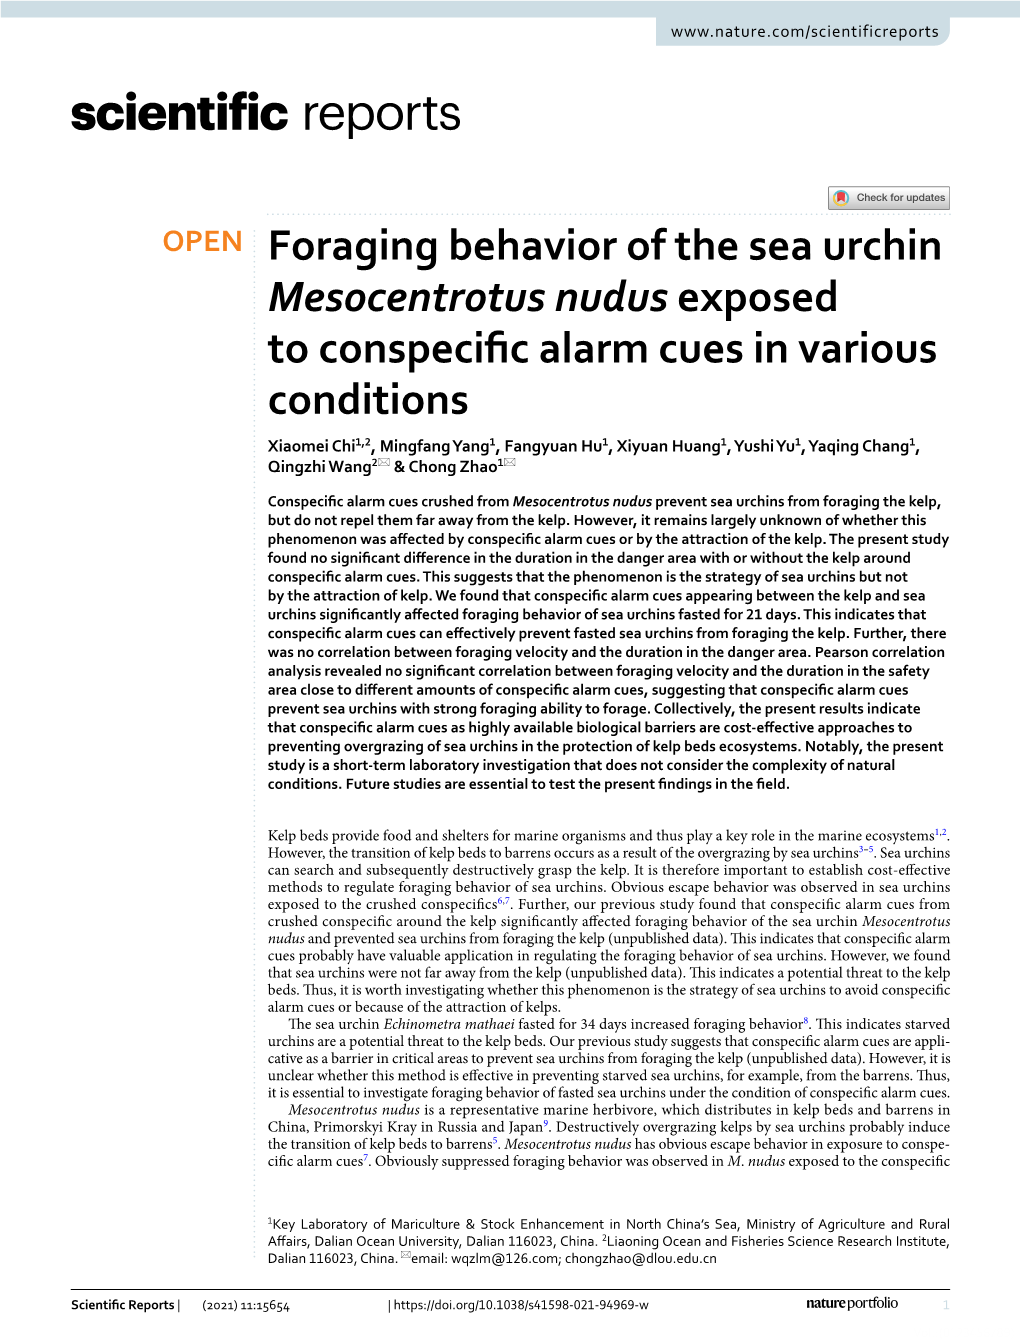 Foraging Behavior of the Sea Urchin Mesocentrotus Nudus Exposed To